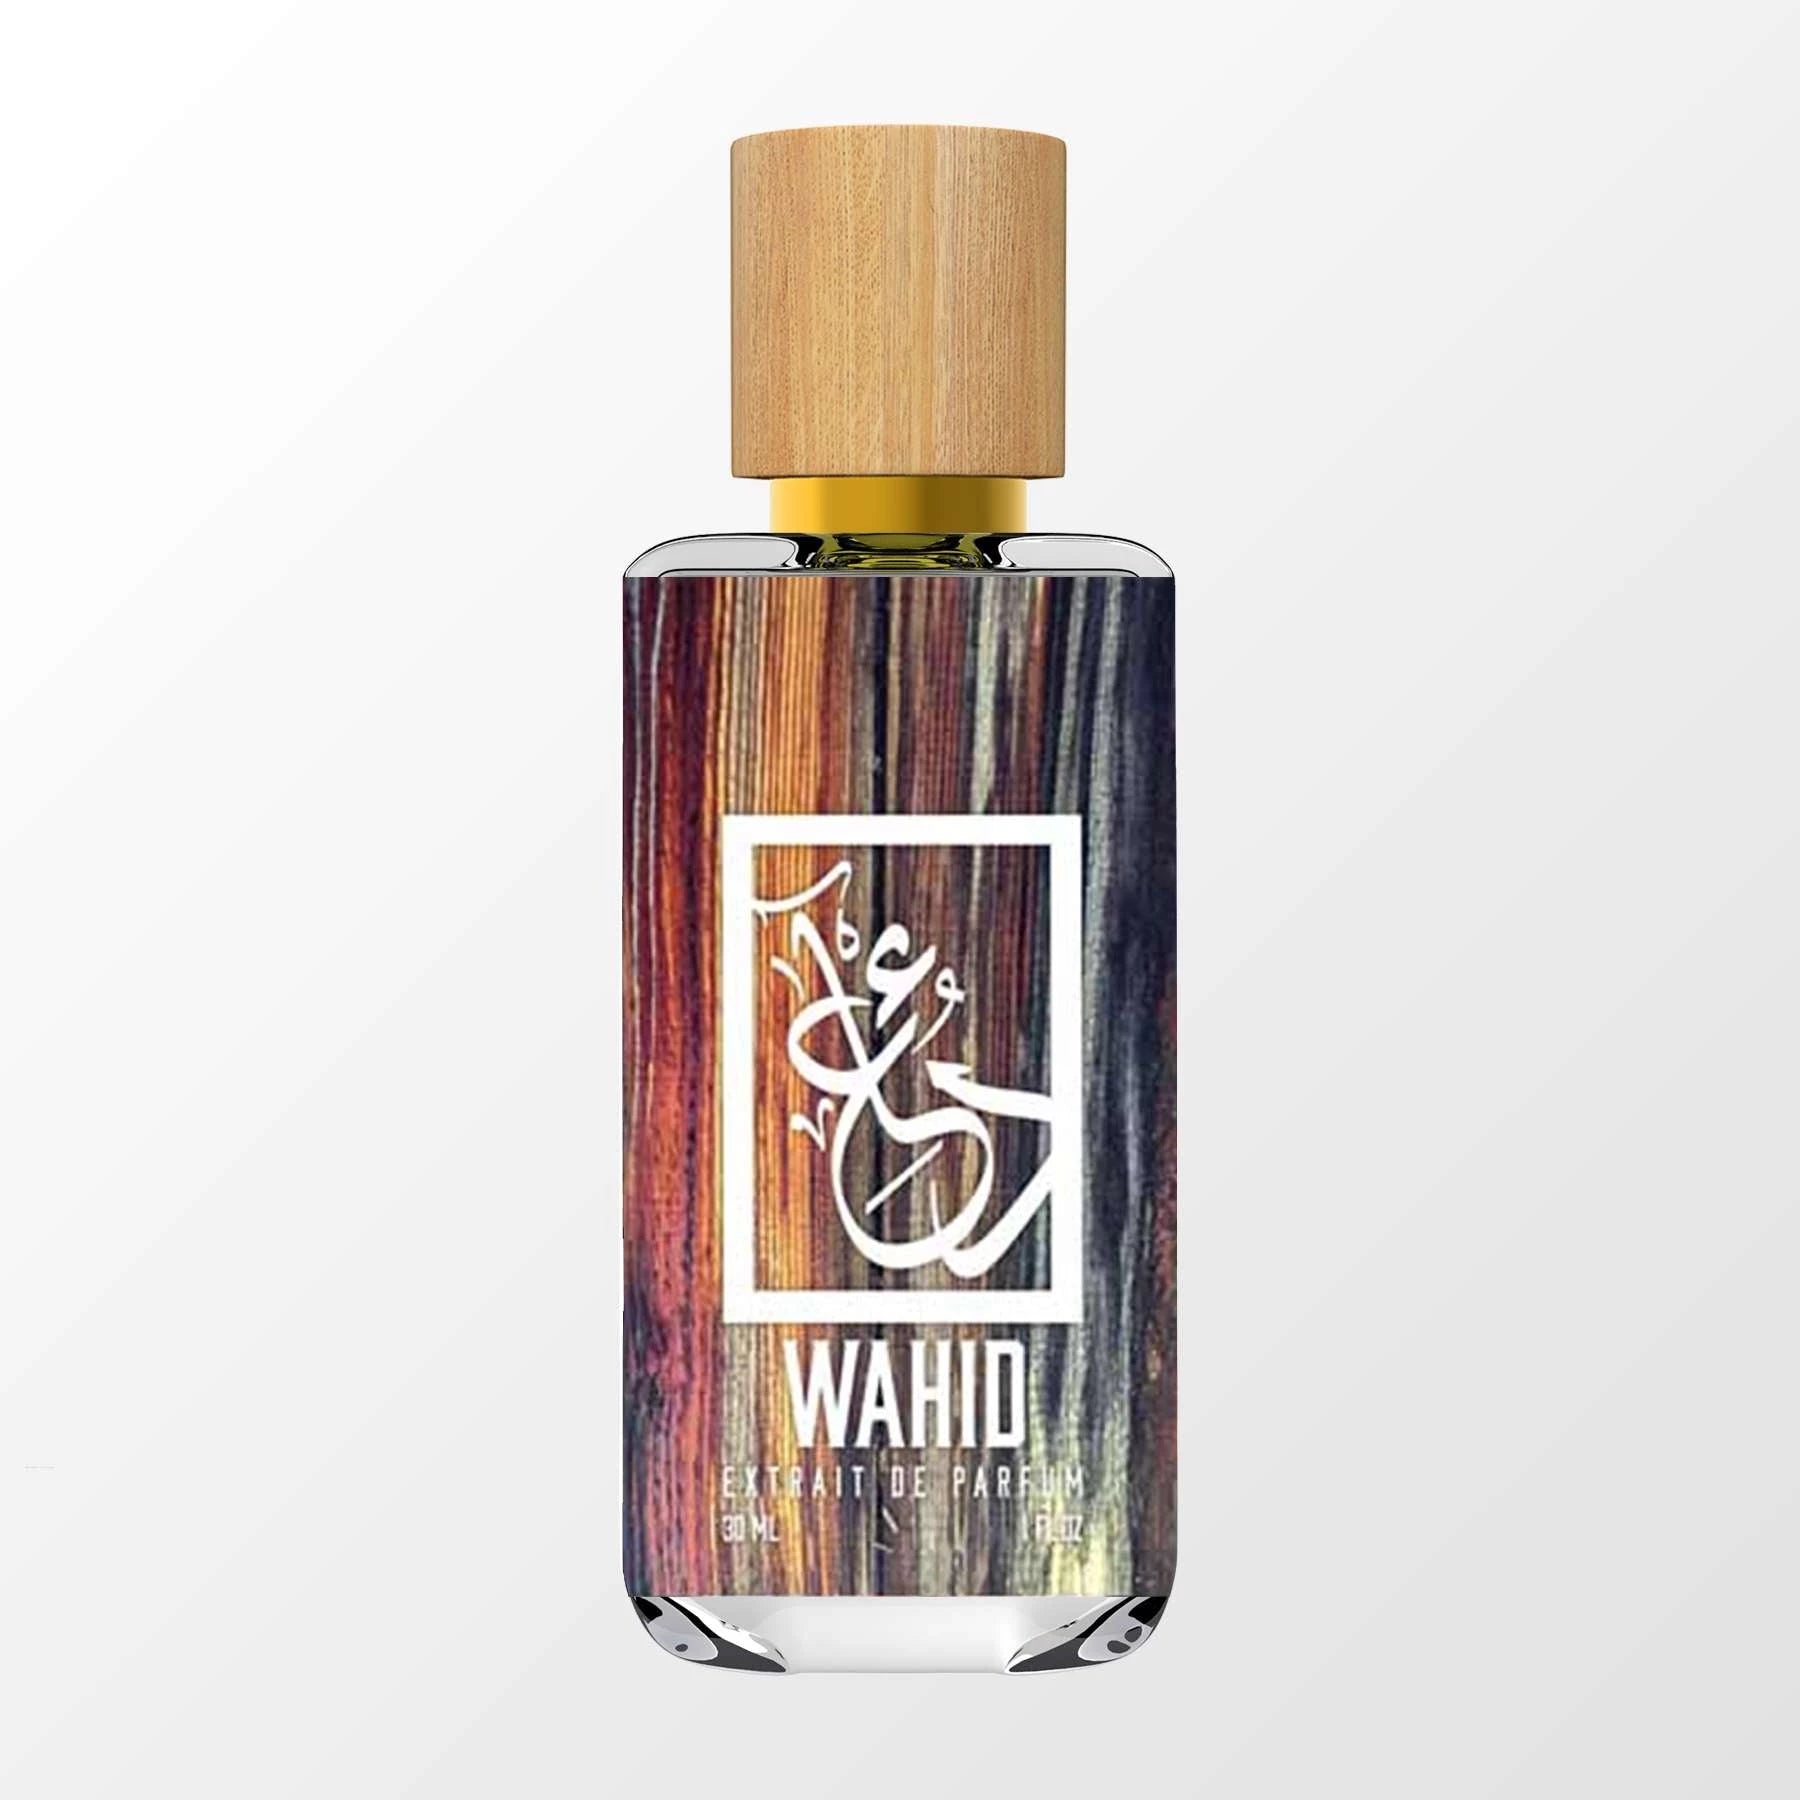 wahid-tilted